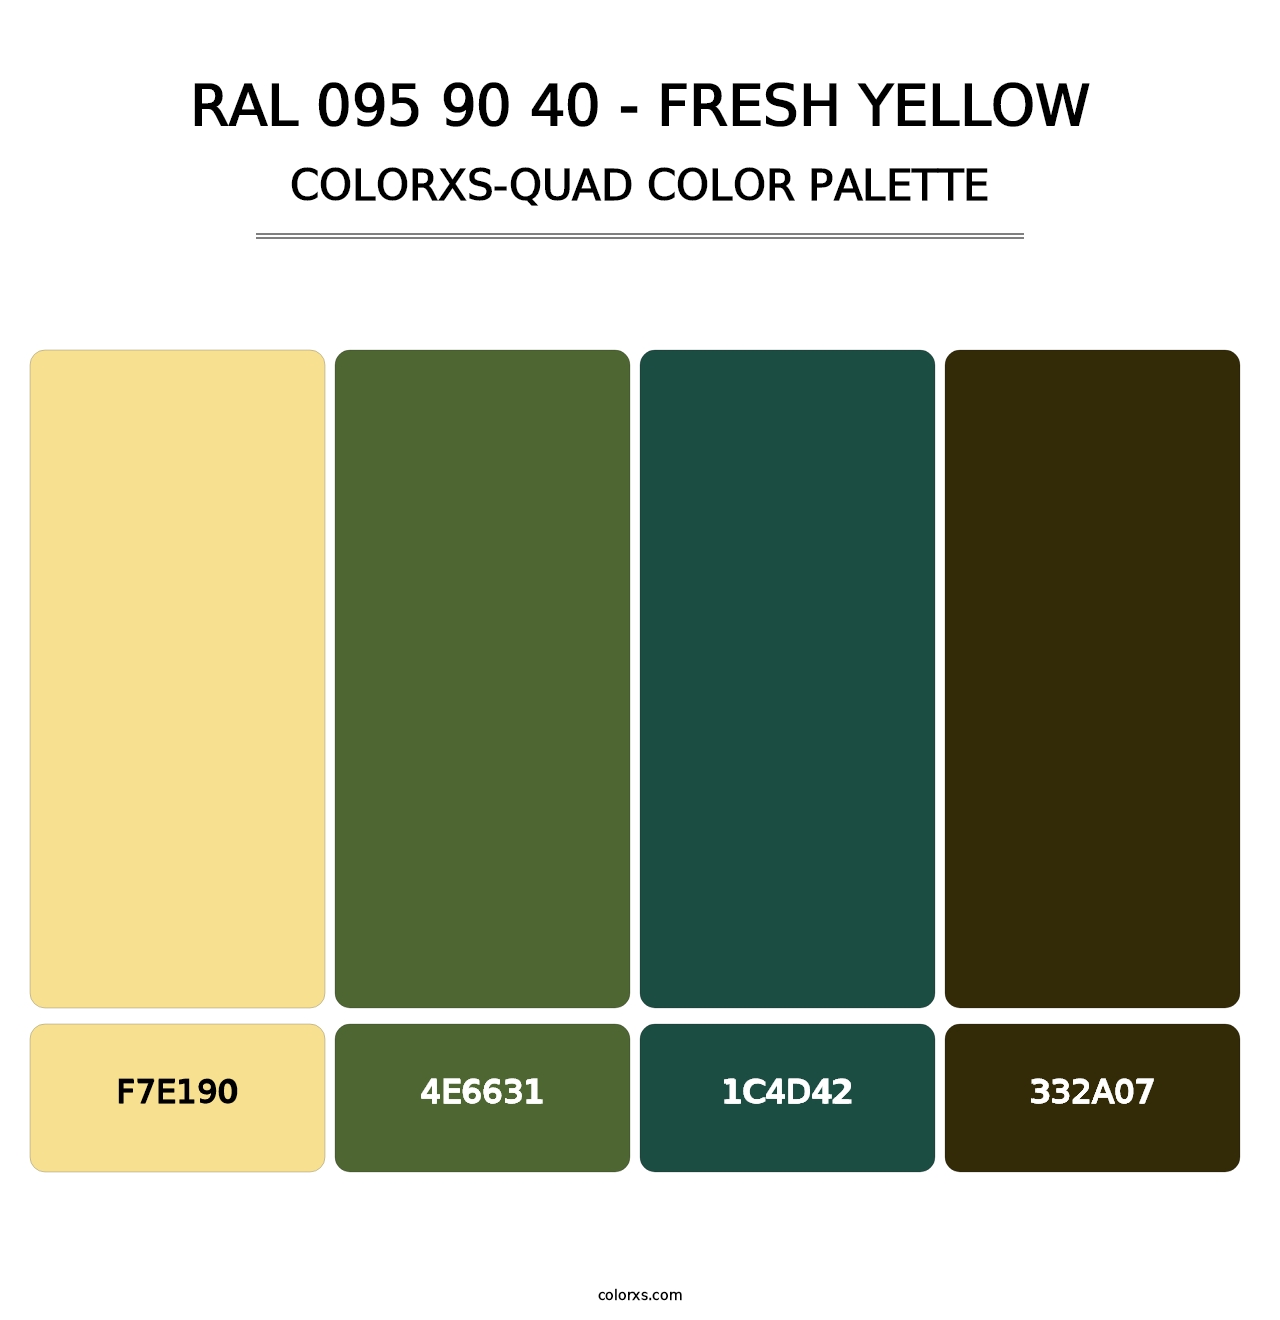 RAL 095 90 40 - Fresh Yellow - Colorxs Quad Palette